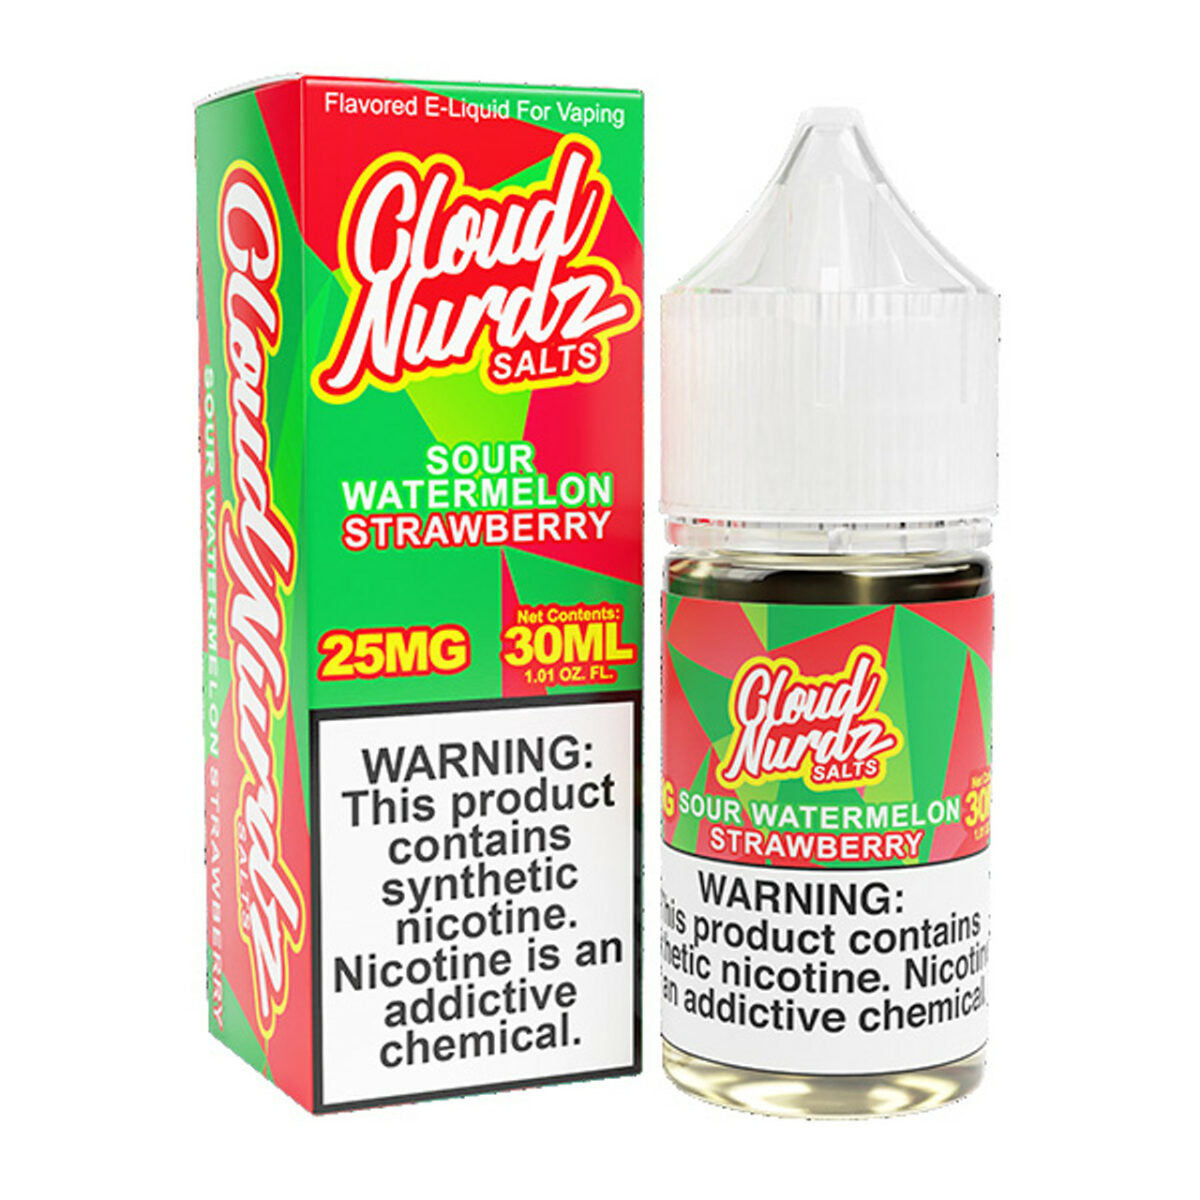 Cloud Nurdz Salt Series E-Liquid 30mL Sour Watermelon Strawberry with packagingh 